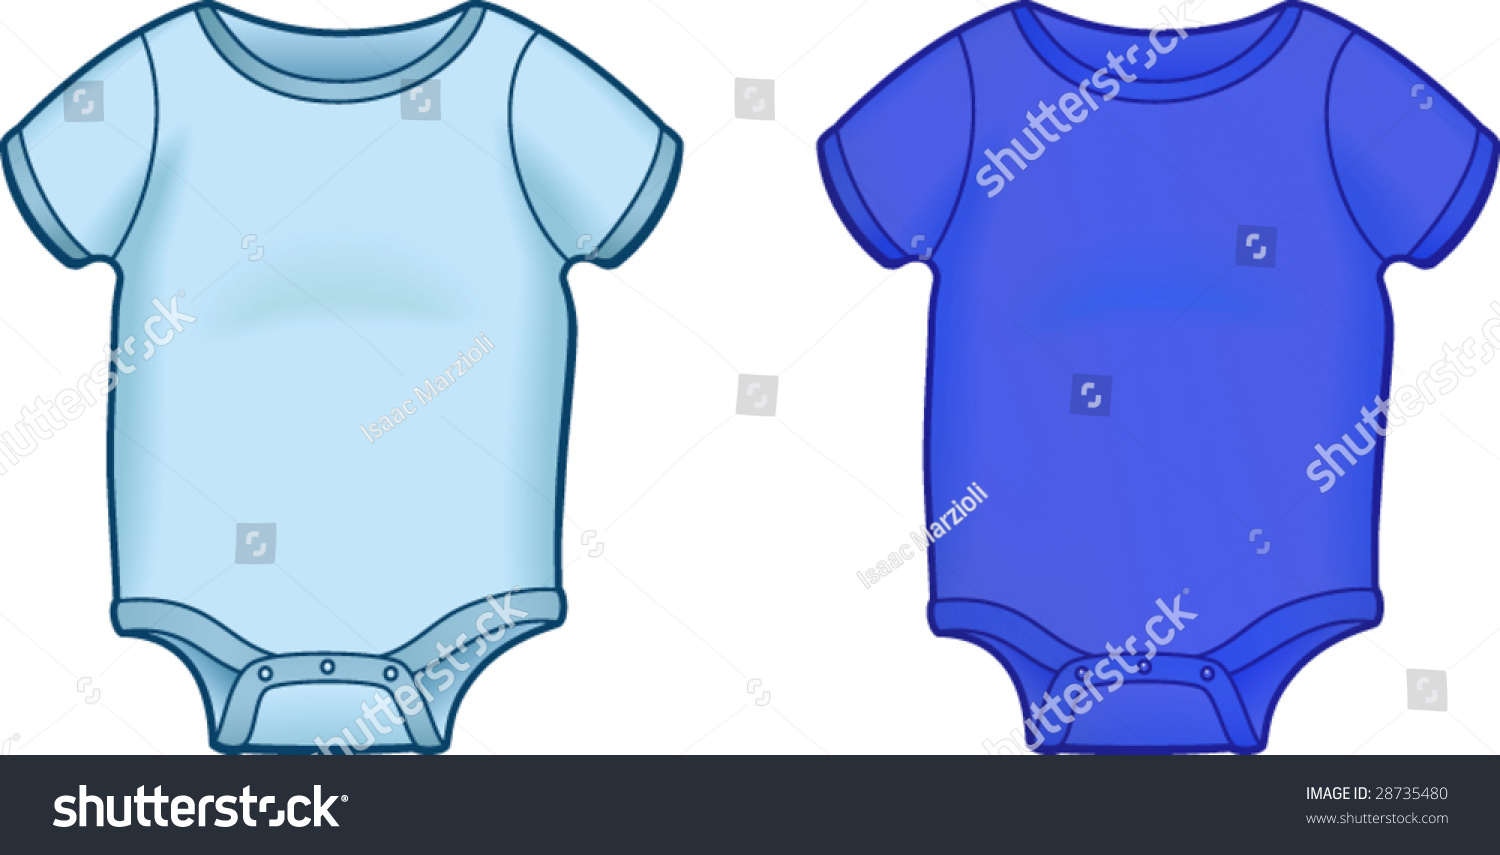 Baby Onesies 2 Different Blue Versions Stock Vector 28735480 - Shutterstock